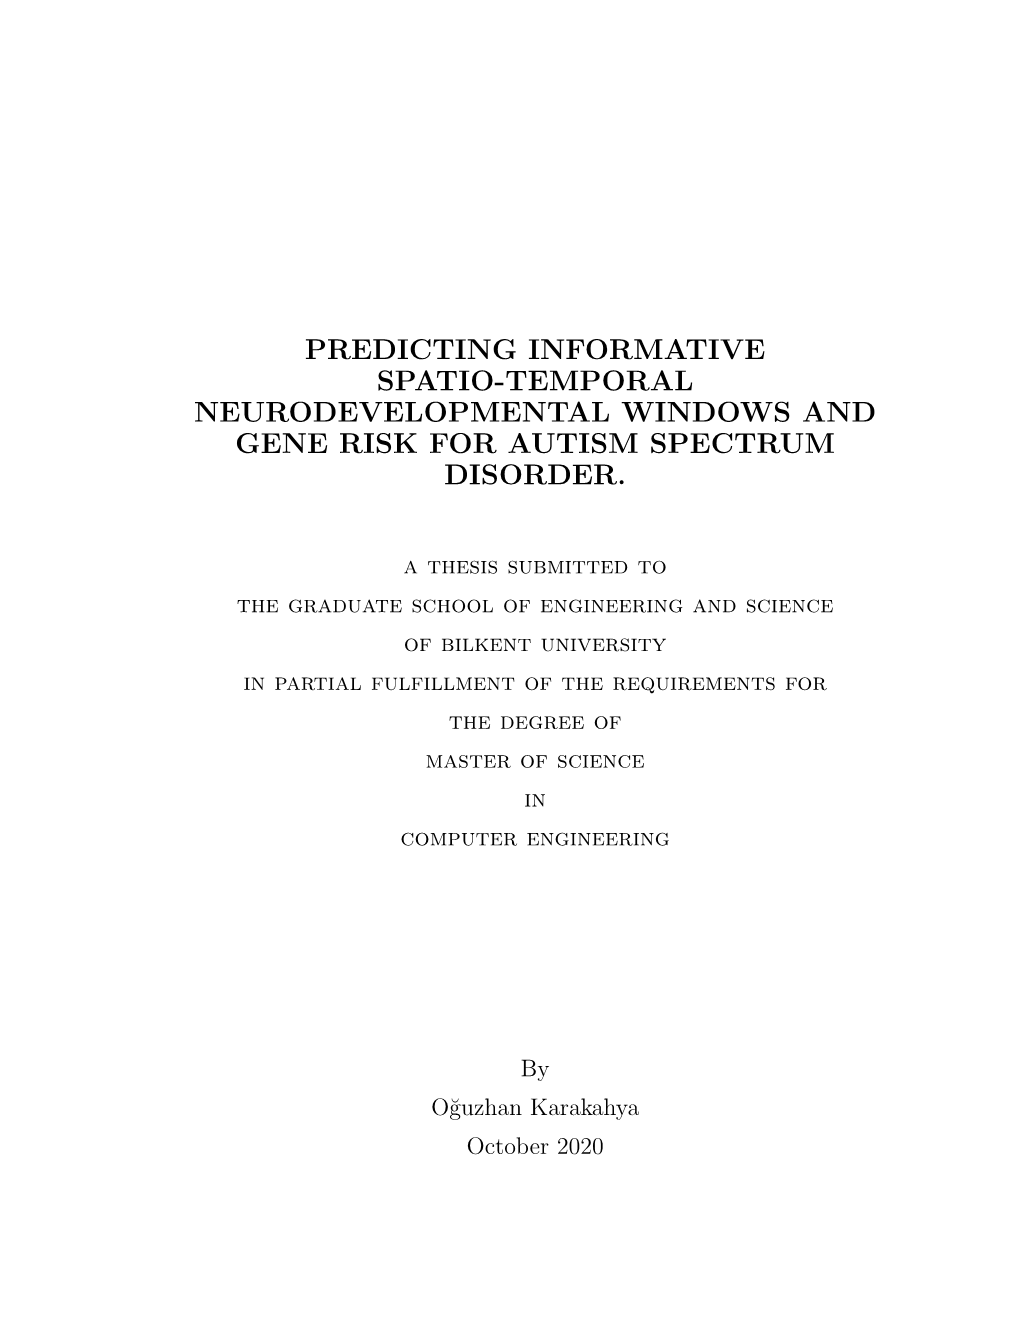 Predicting Informative Spatio-Temporal Neurodevelopmental Windows and Gene Risk for Autism Spectrum Disorder